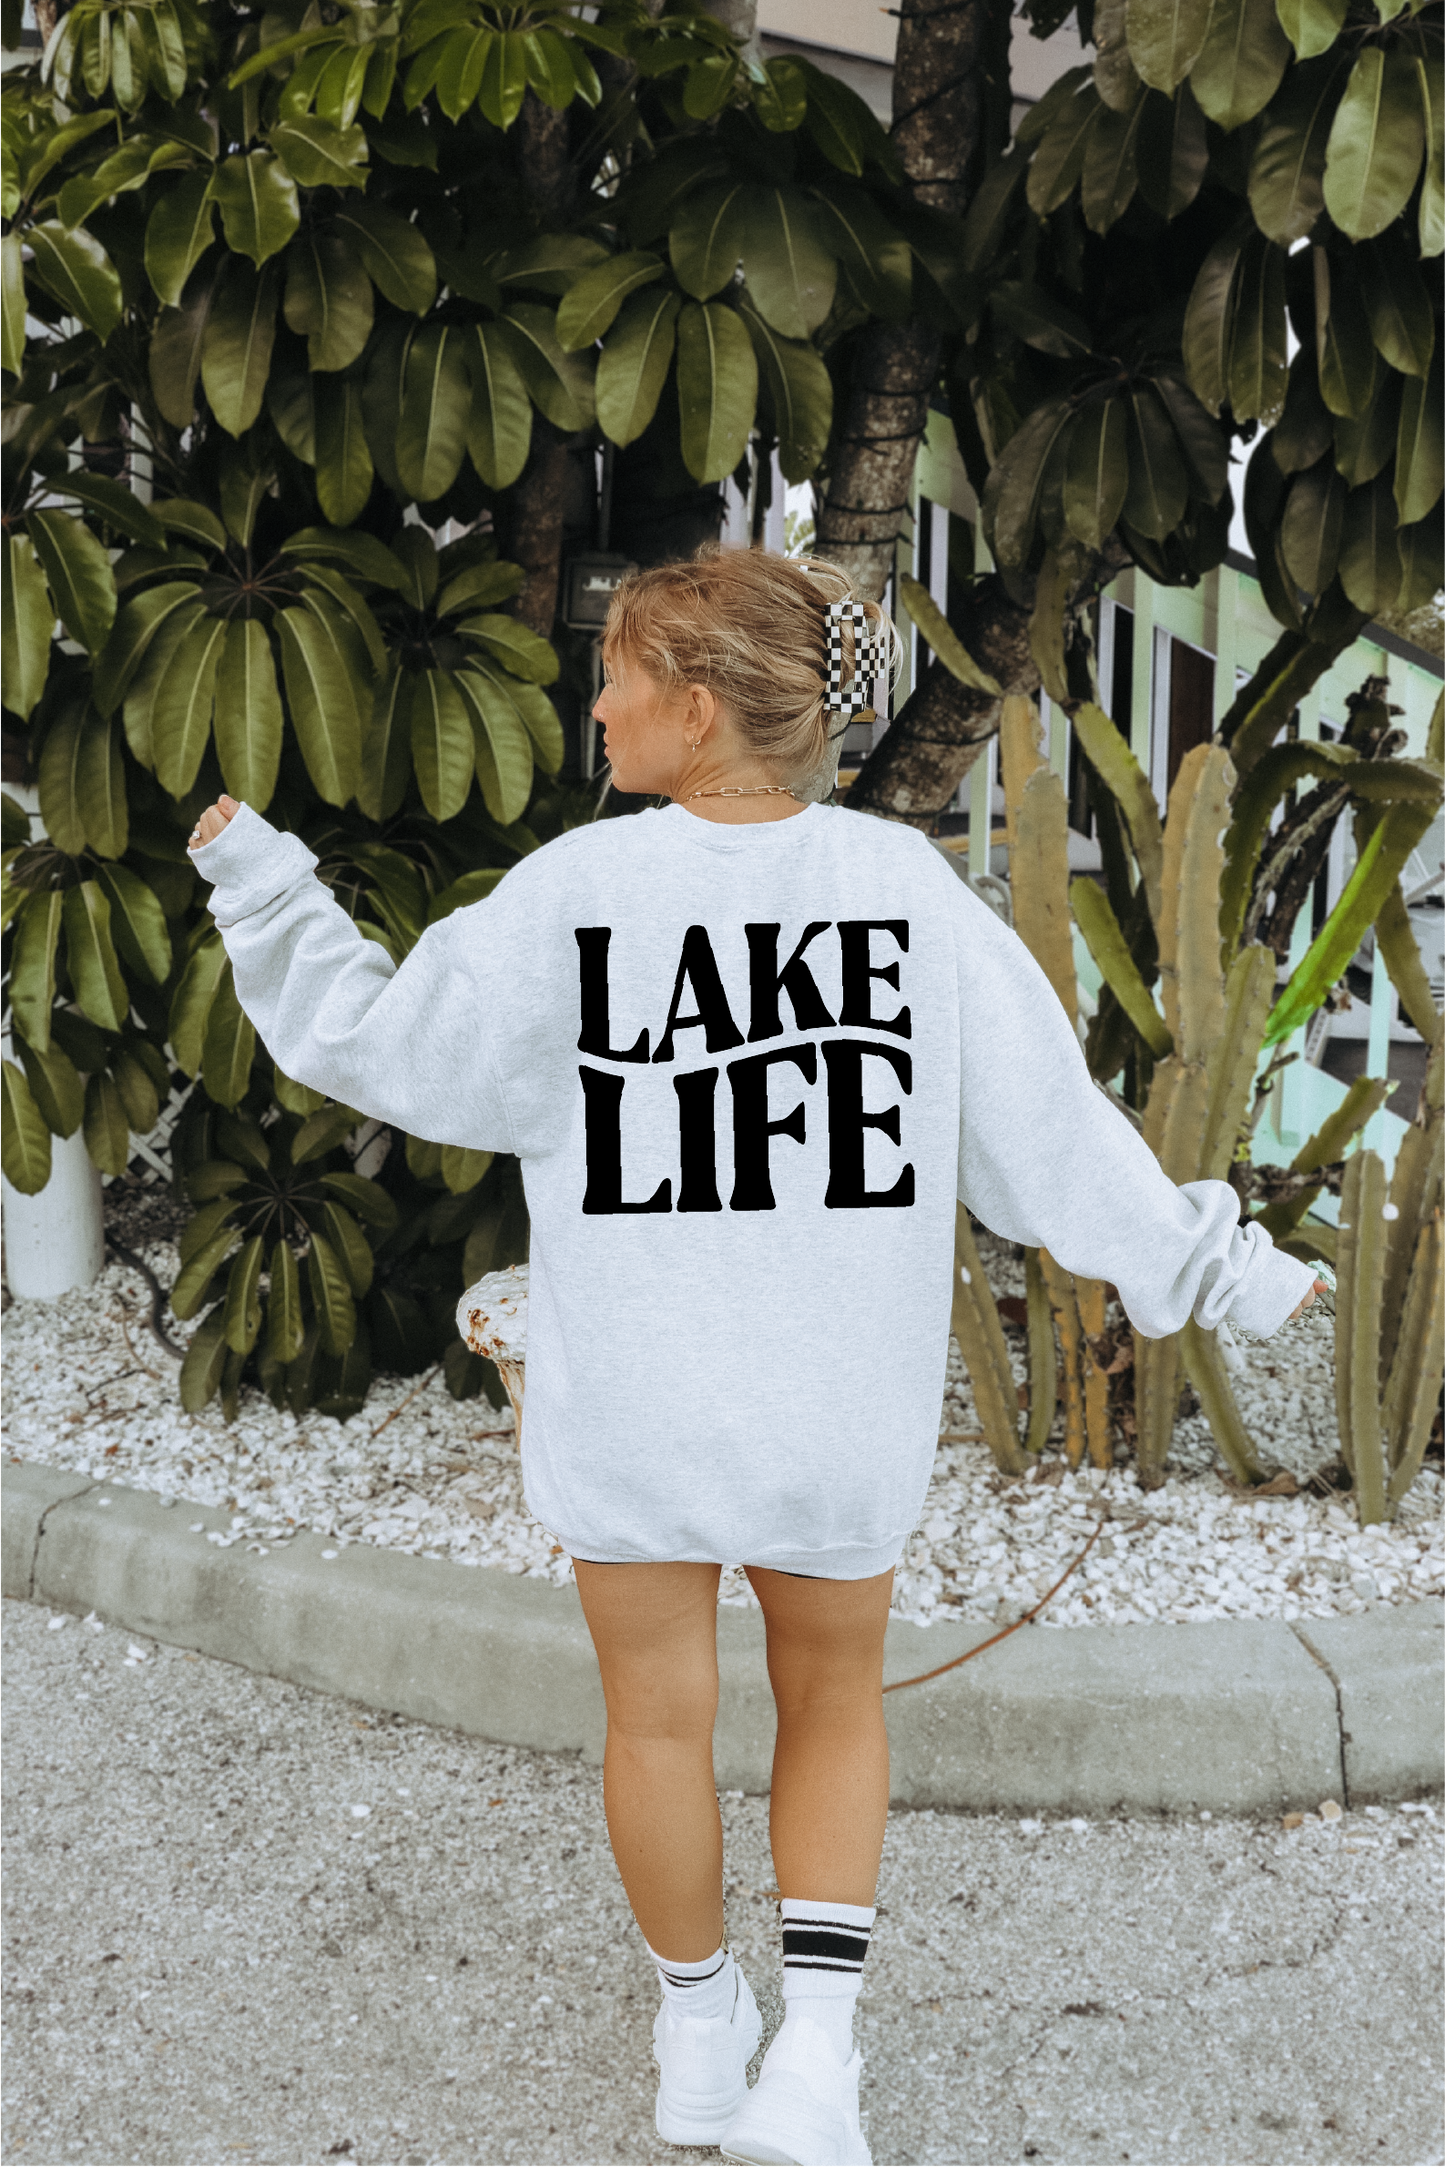 Lake Life Personalized Crewneck | Summer Apparel